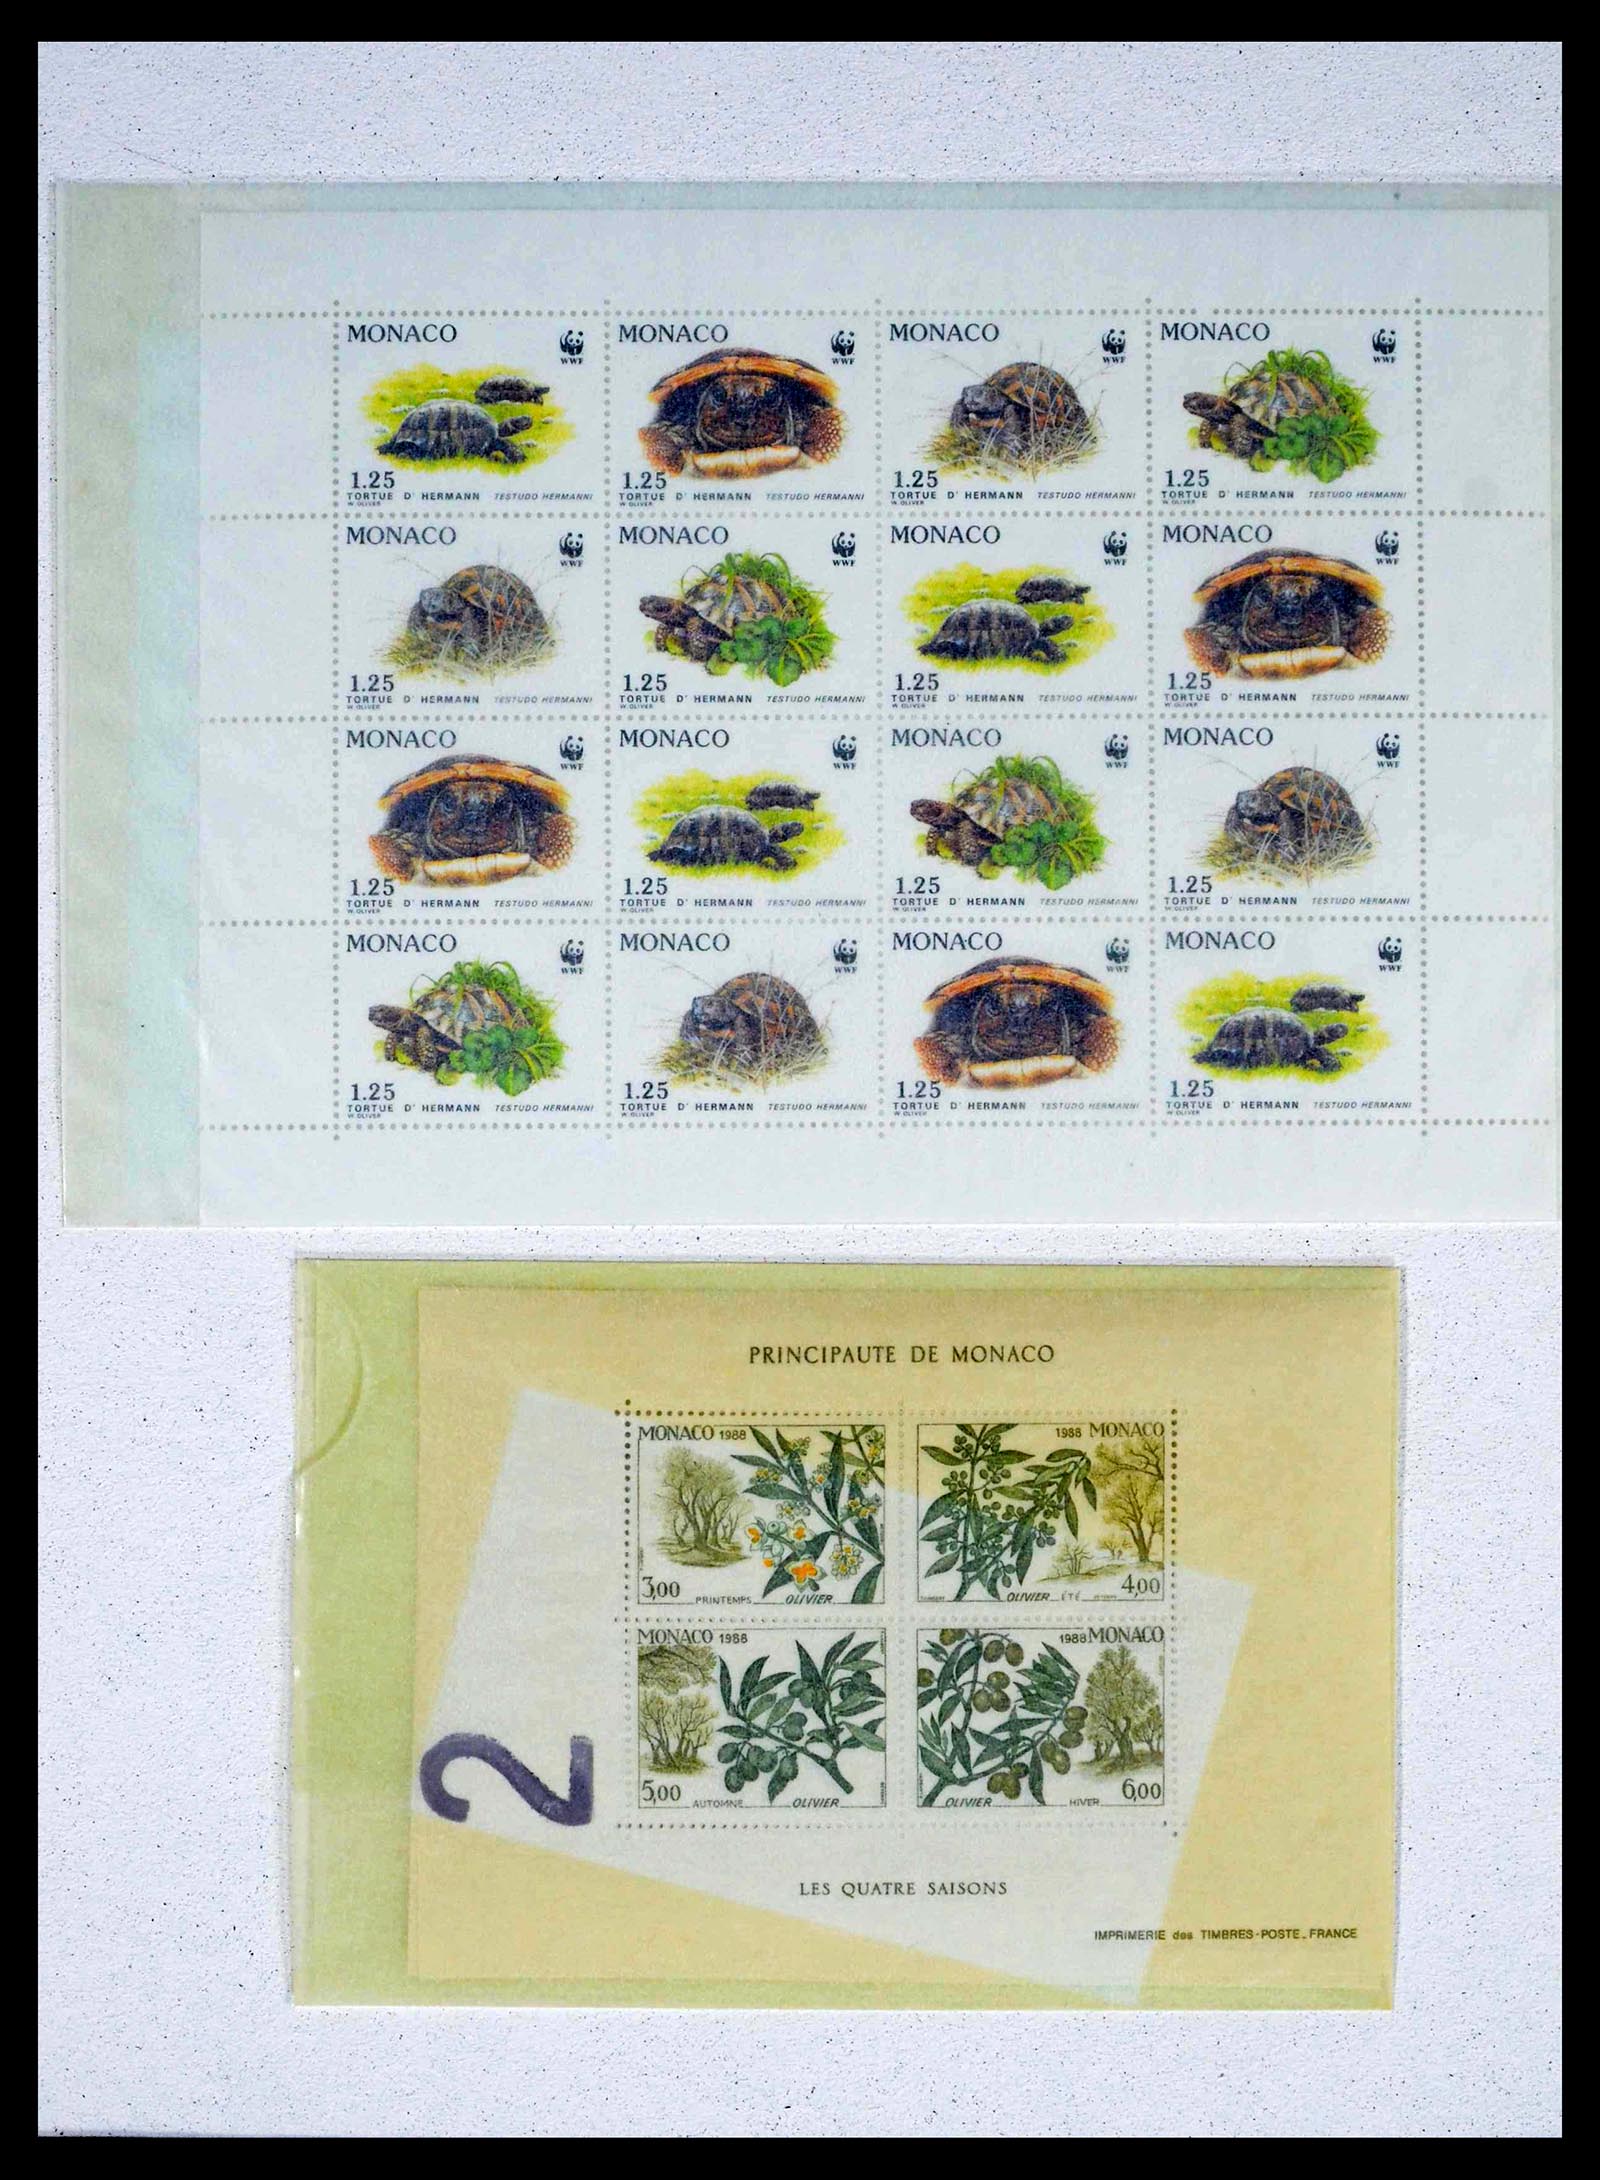 39211 0192 - Stamp collection 39211 Monaco 1885-1983.